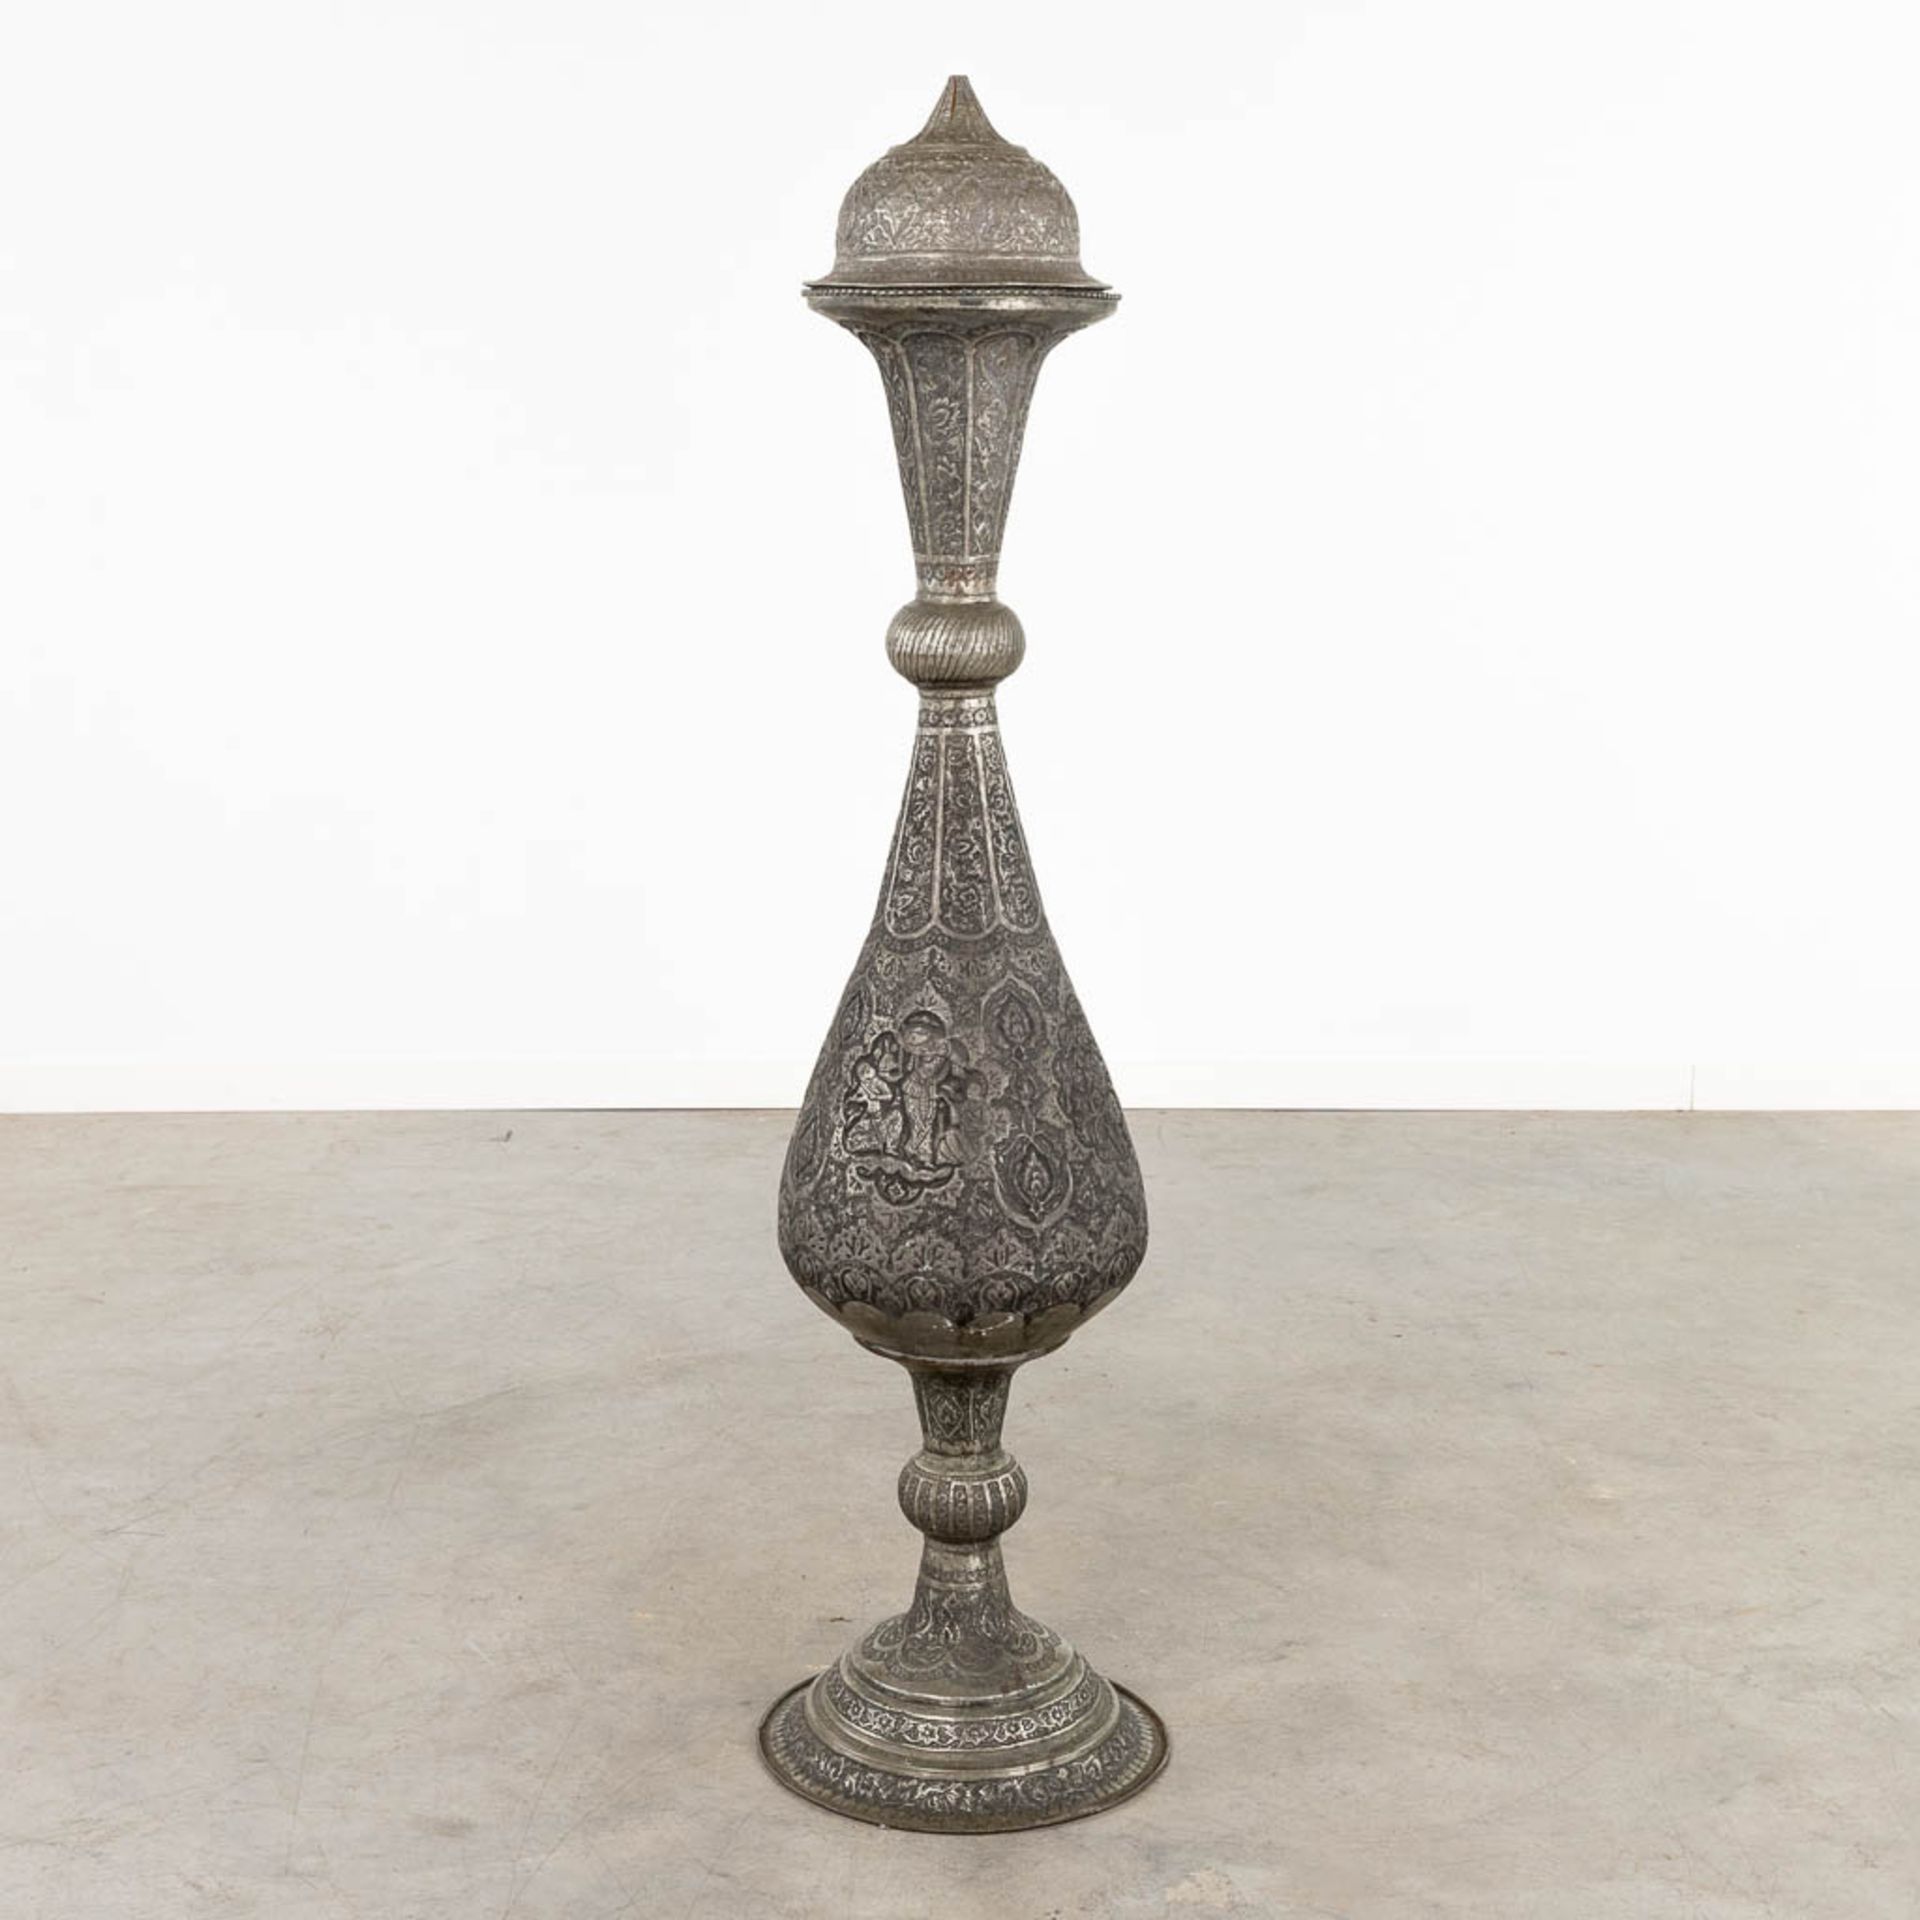 A large decorative vase, India. 19th C. (H:128 x D:32 cm) - Image 4 of 14